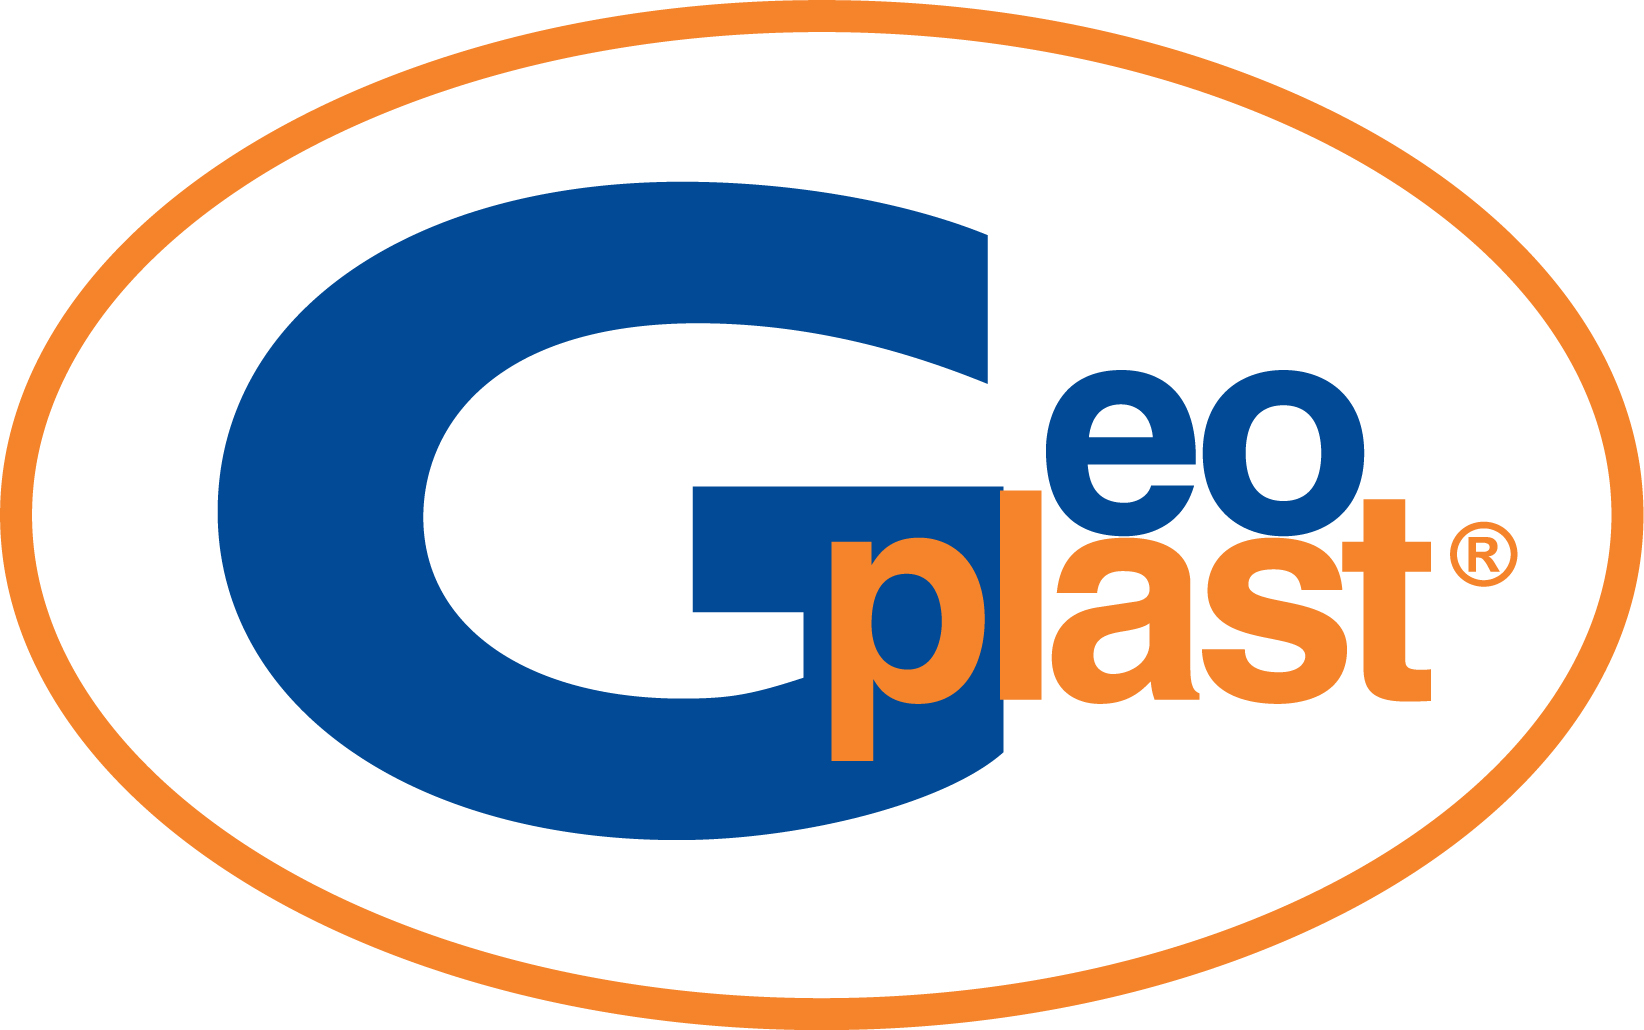 Geoplast S.p.A.